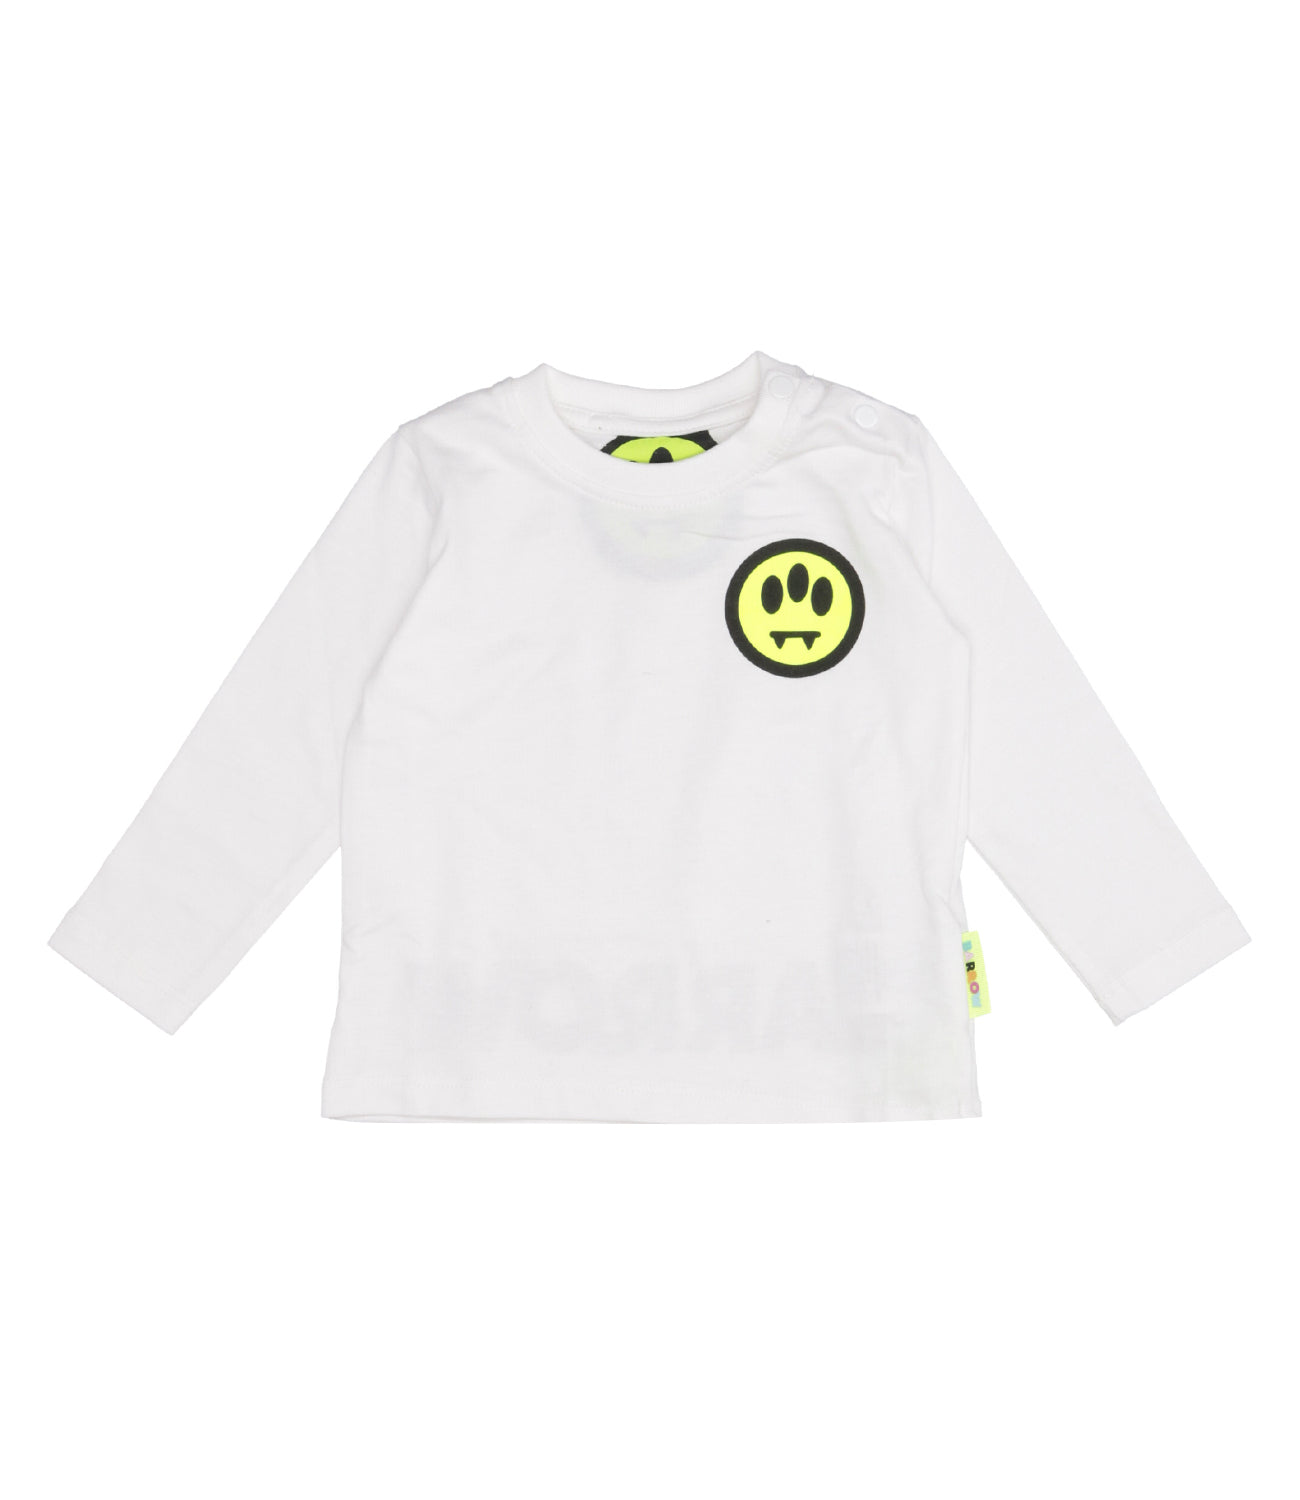 Barrow Kids | T-Shirt Bianco